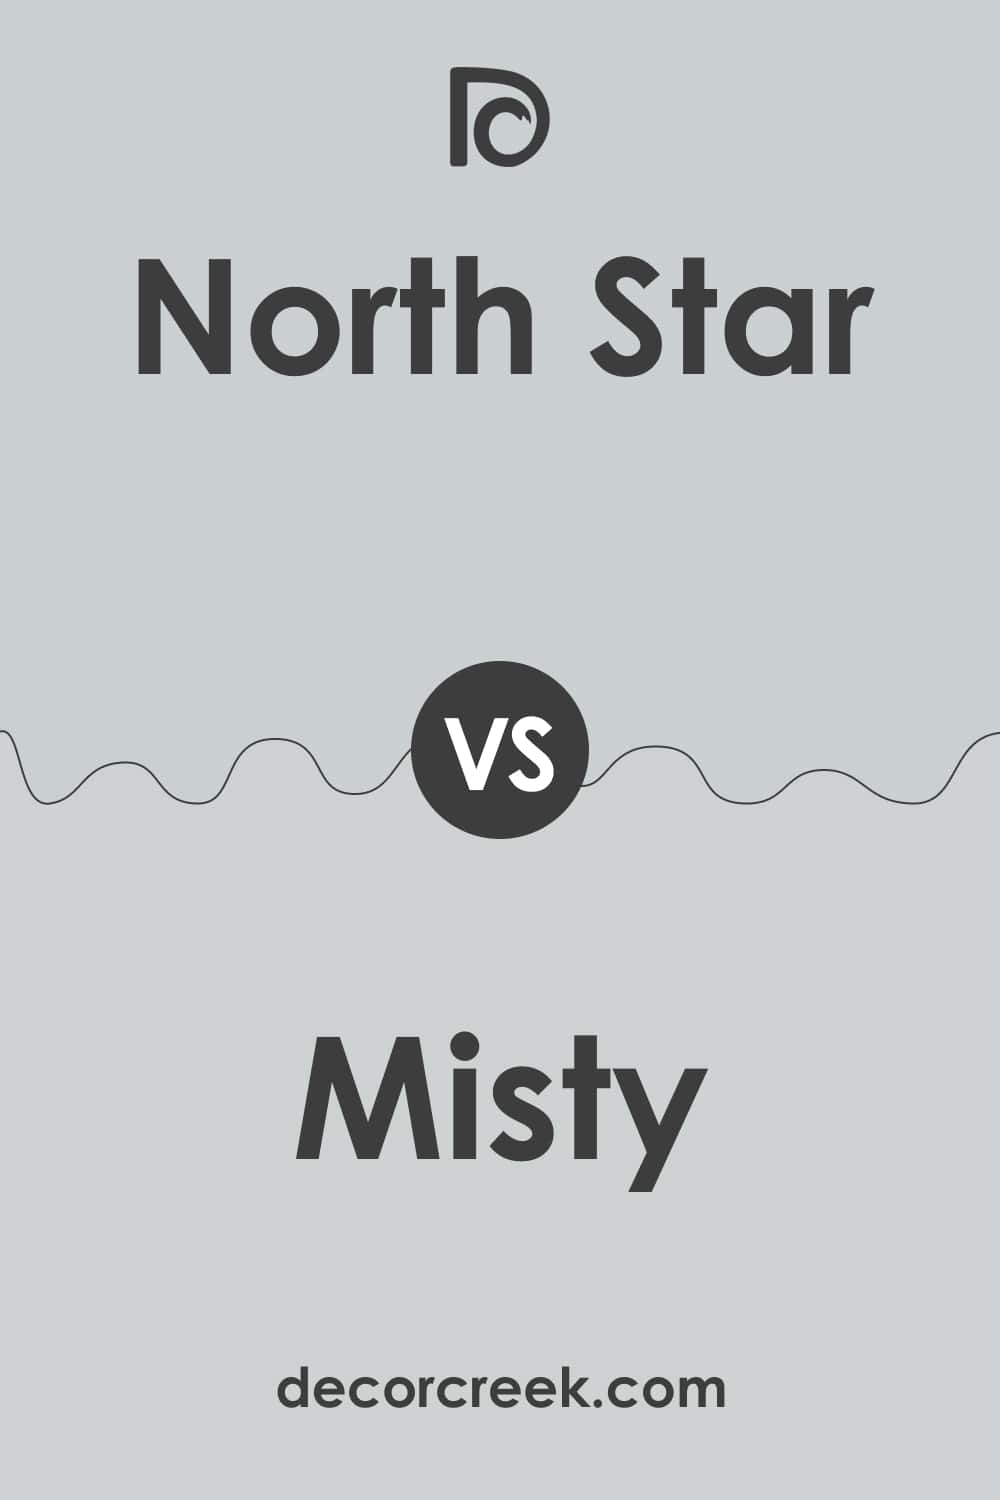 North Star vs Misty